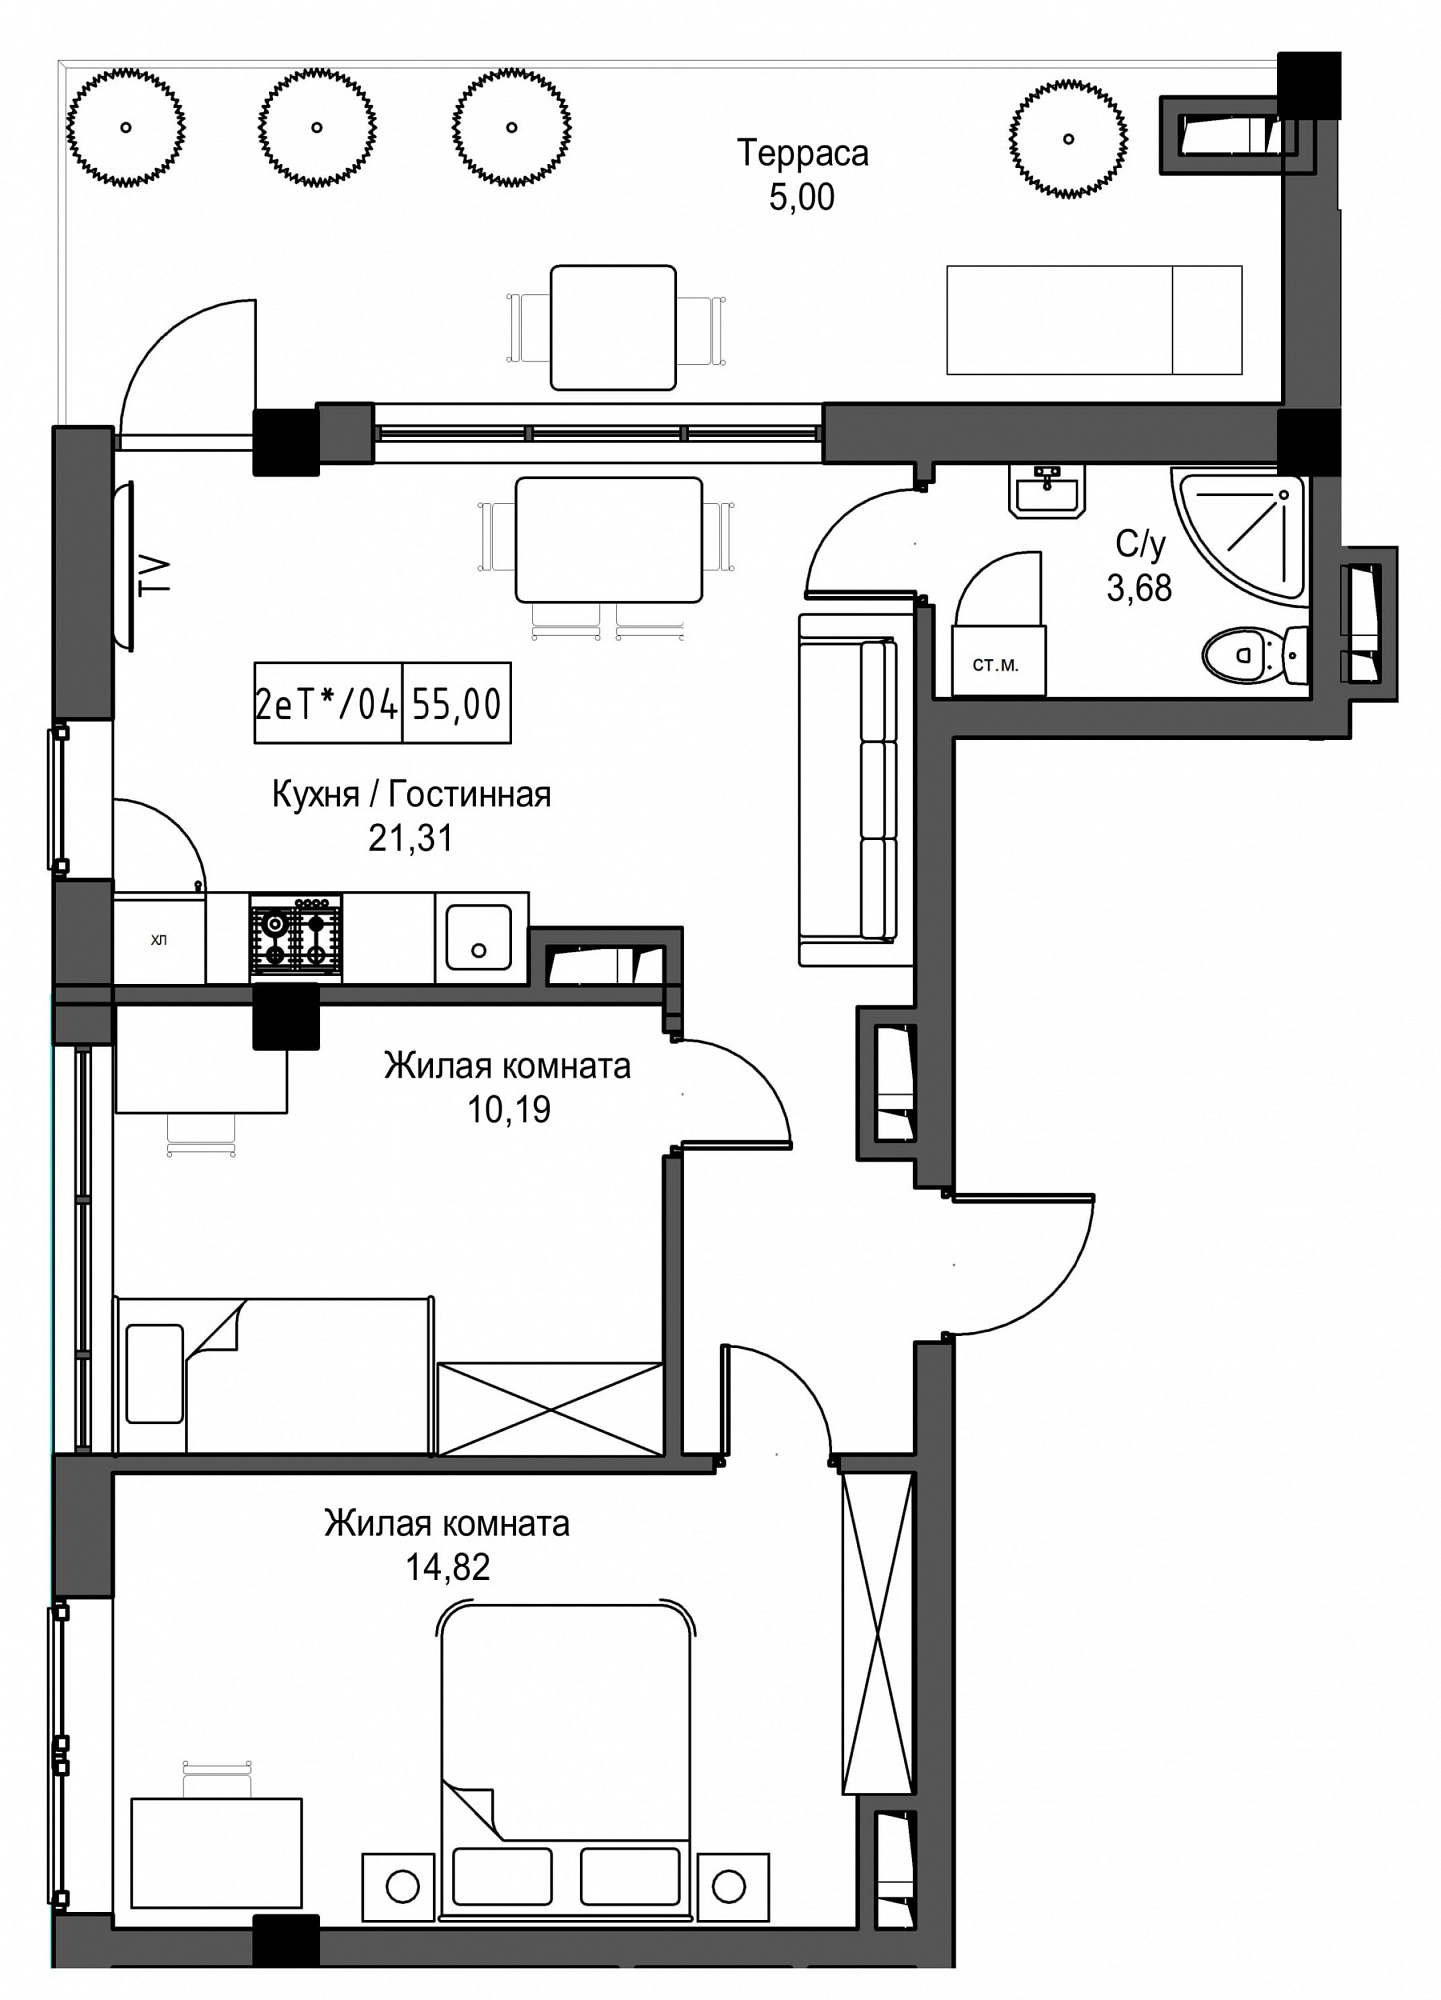 Planning 2-rm flats area 55m2, UM-002-07/0070.